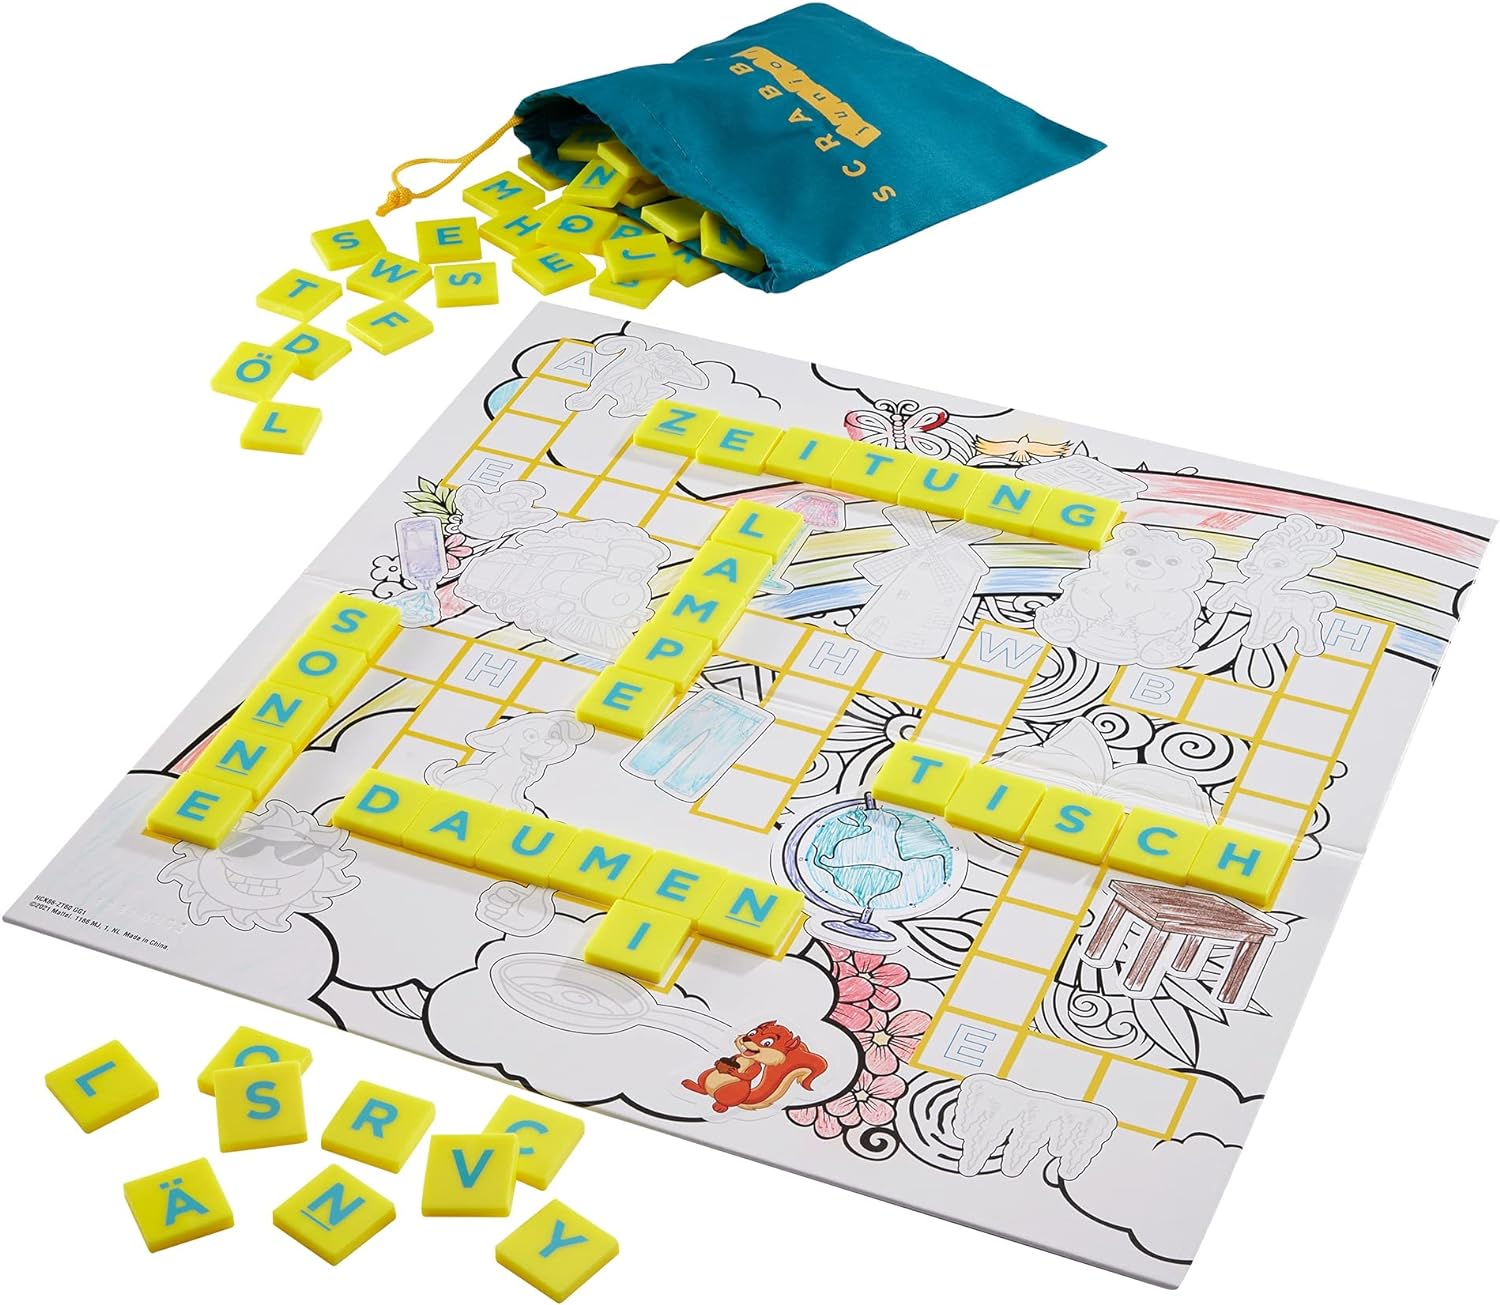 Mattel Scrabble Junior kreativer Lernspaß HCK86  Mattel   